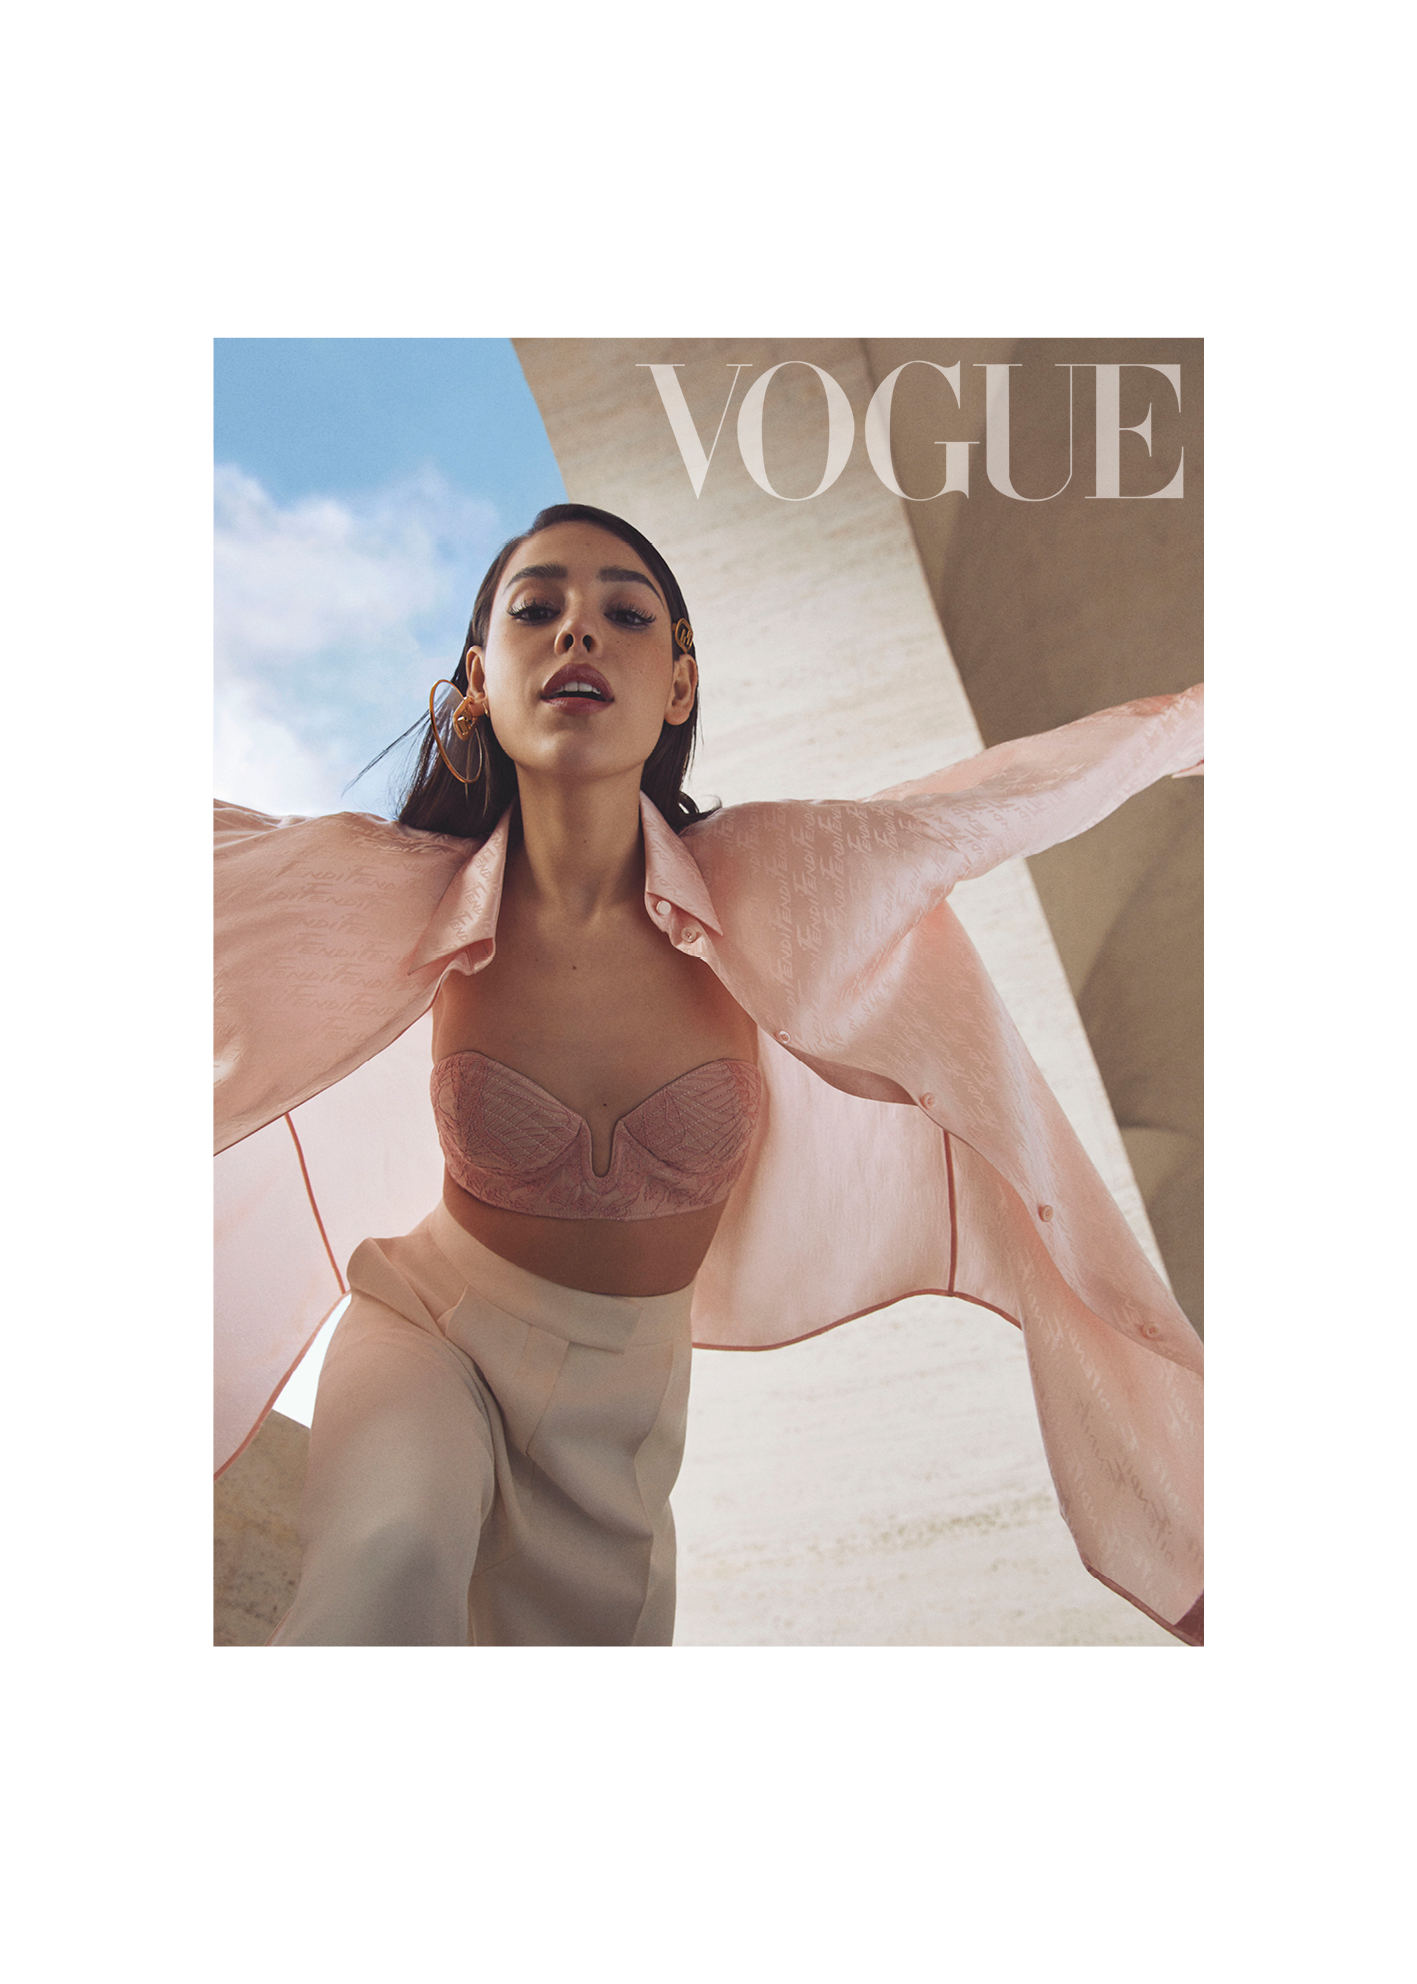 Vogue – Danna Paola